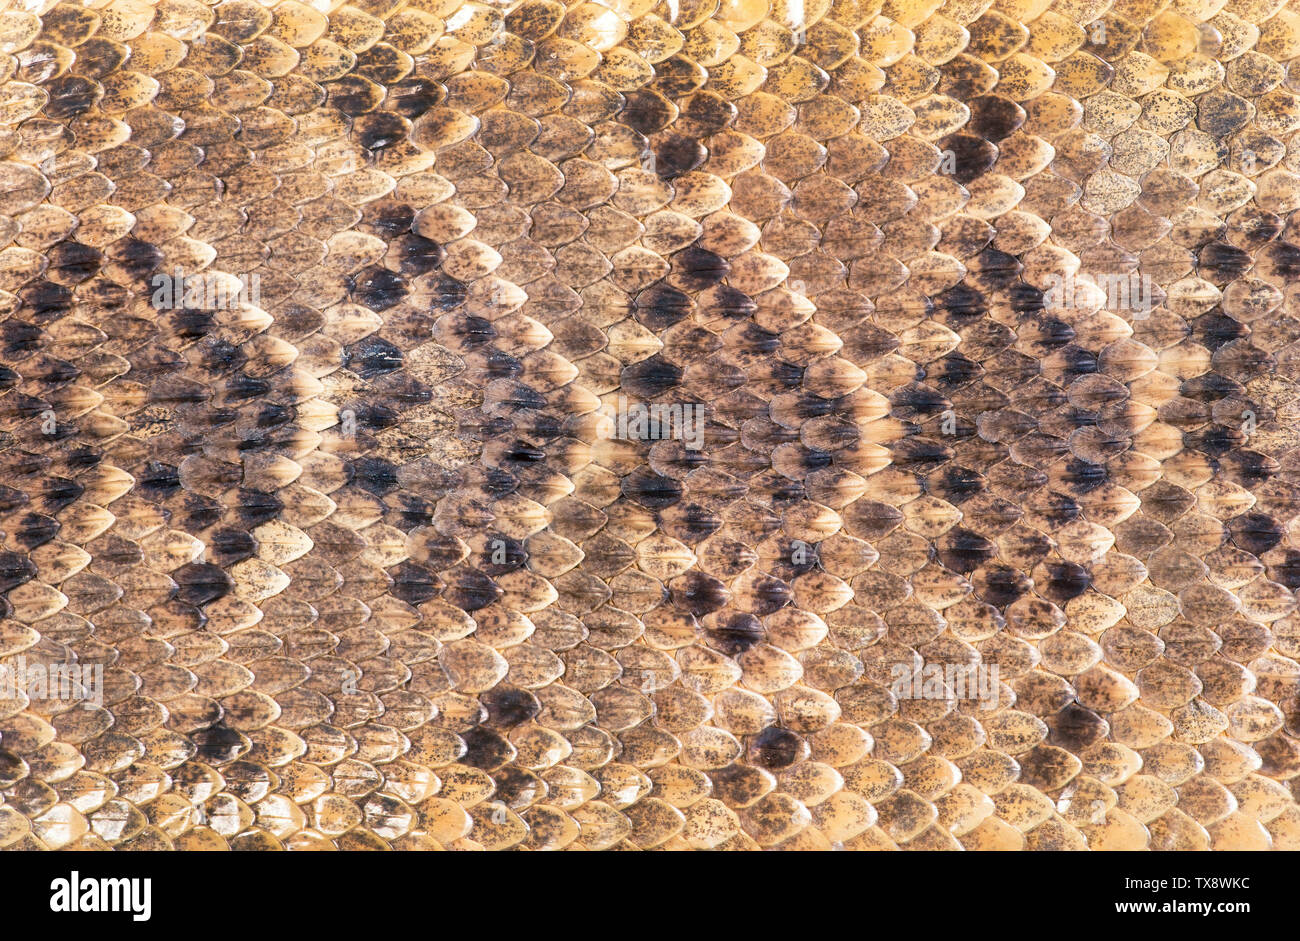 Texas diamondback rattlesnake skin will make for great background. Stock Photo